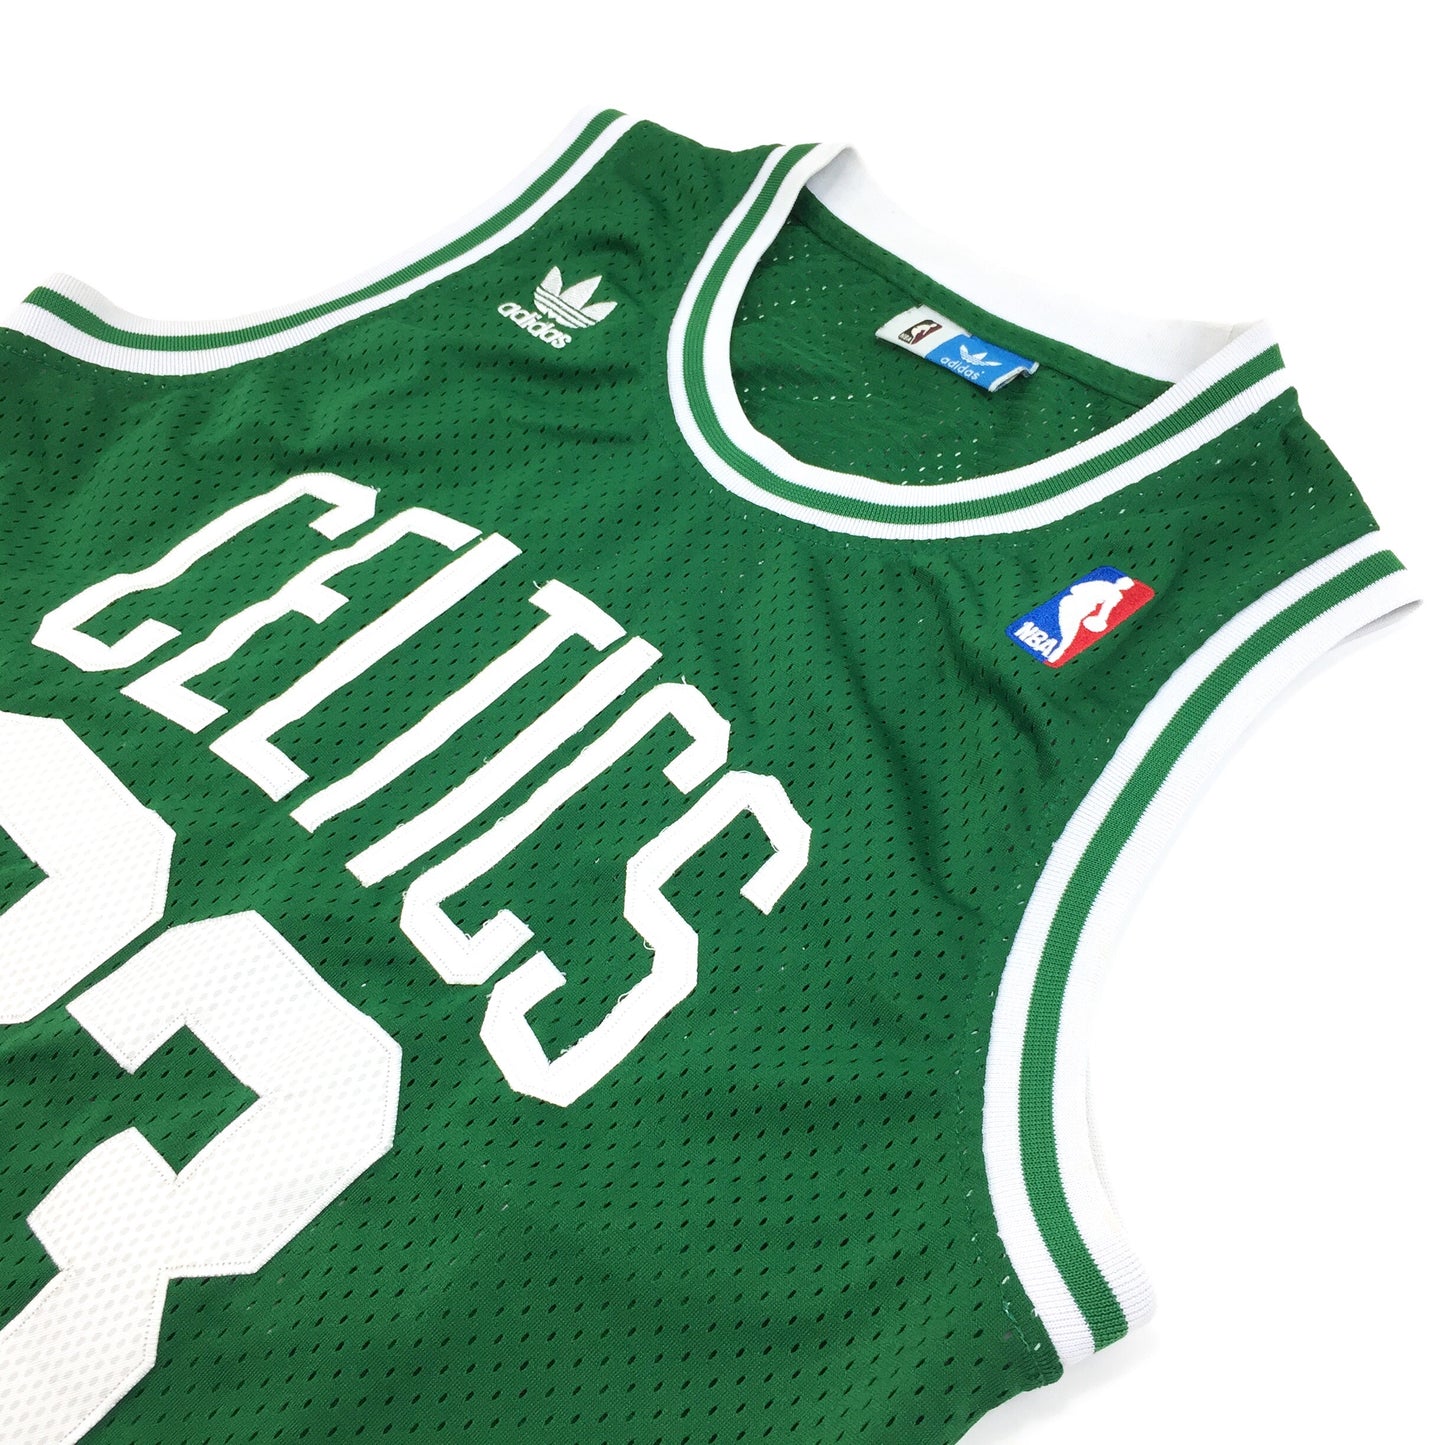 0296 Adidas Vintage Boston Celtics Bird Jersey